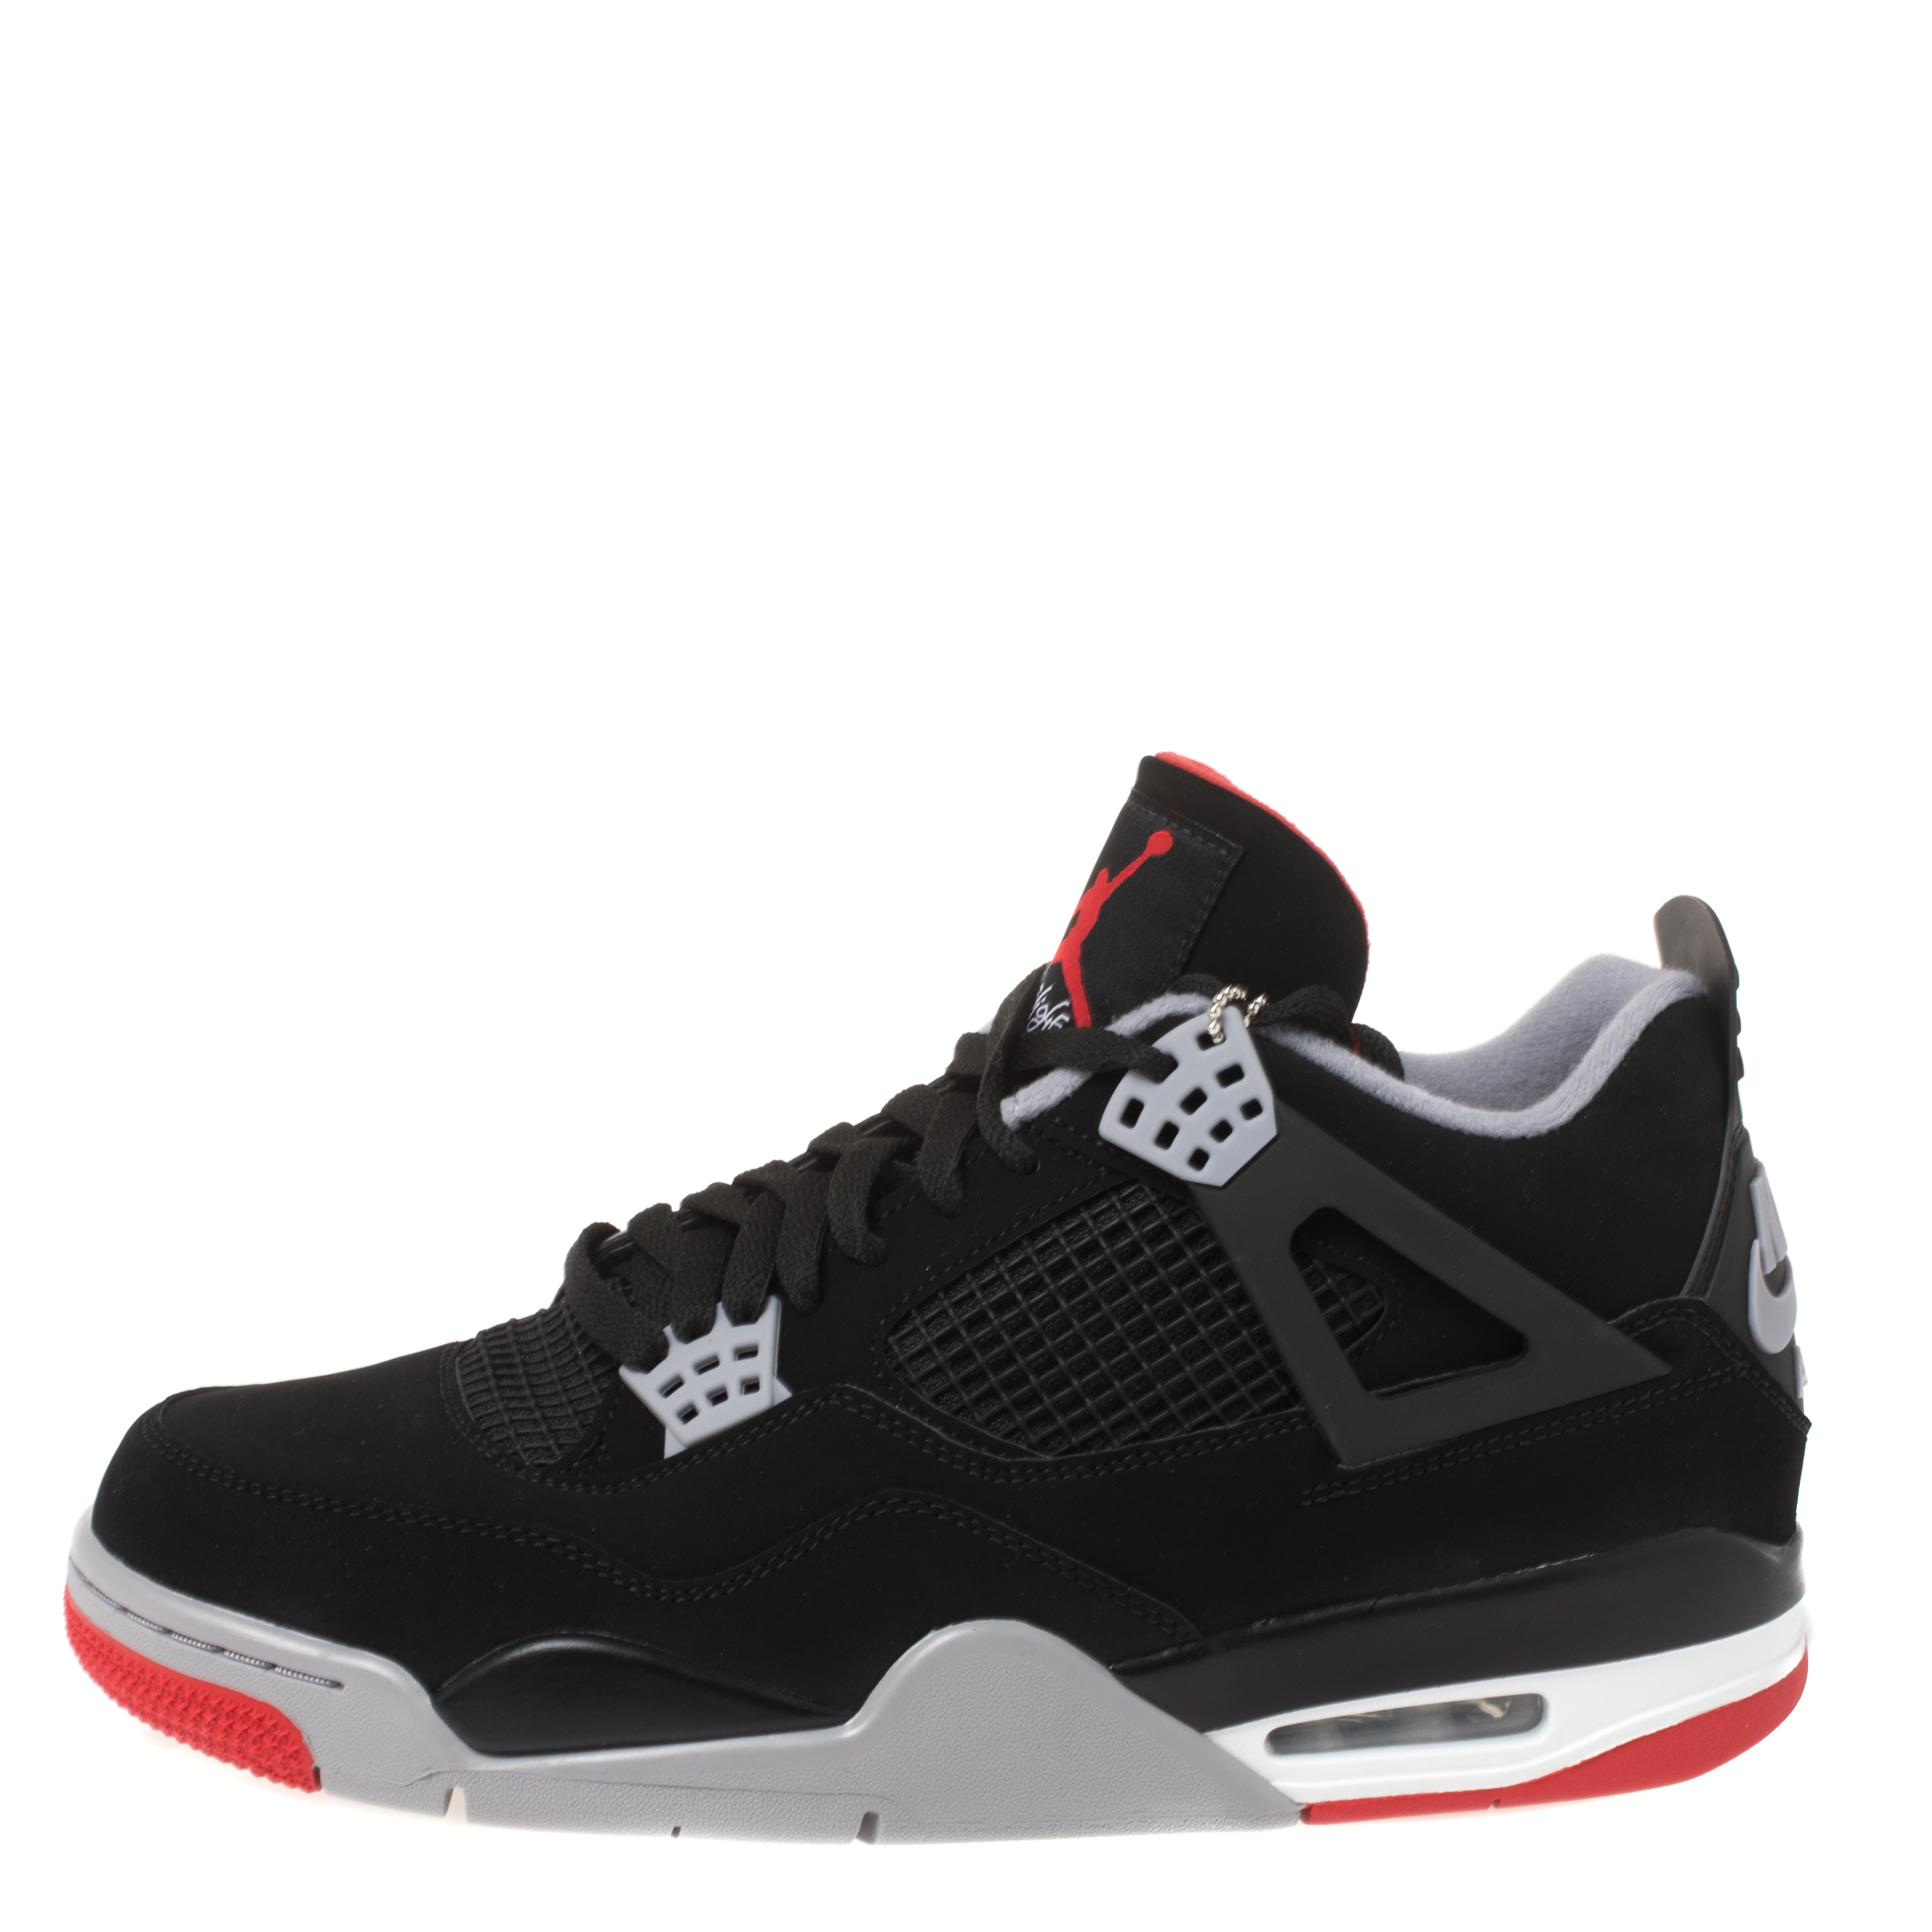 

Air Jordan Black/Red Suede 4 Retro Bred 2019 Release Sneakers Size